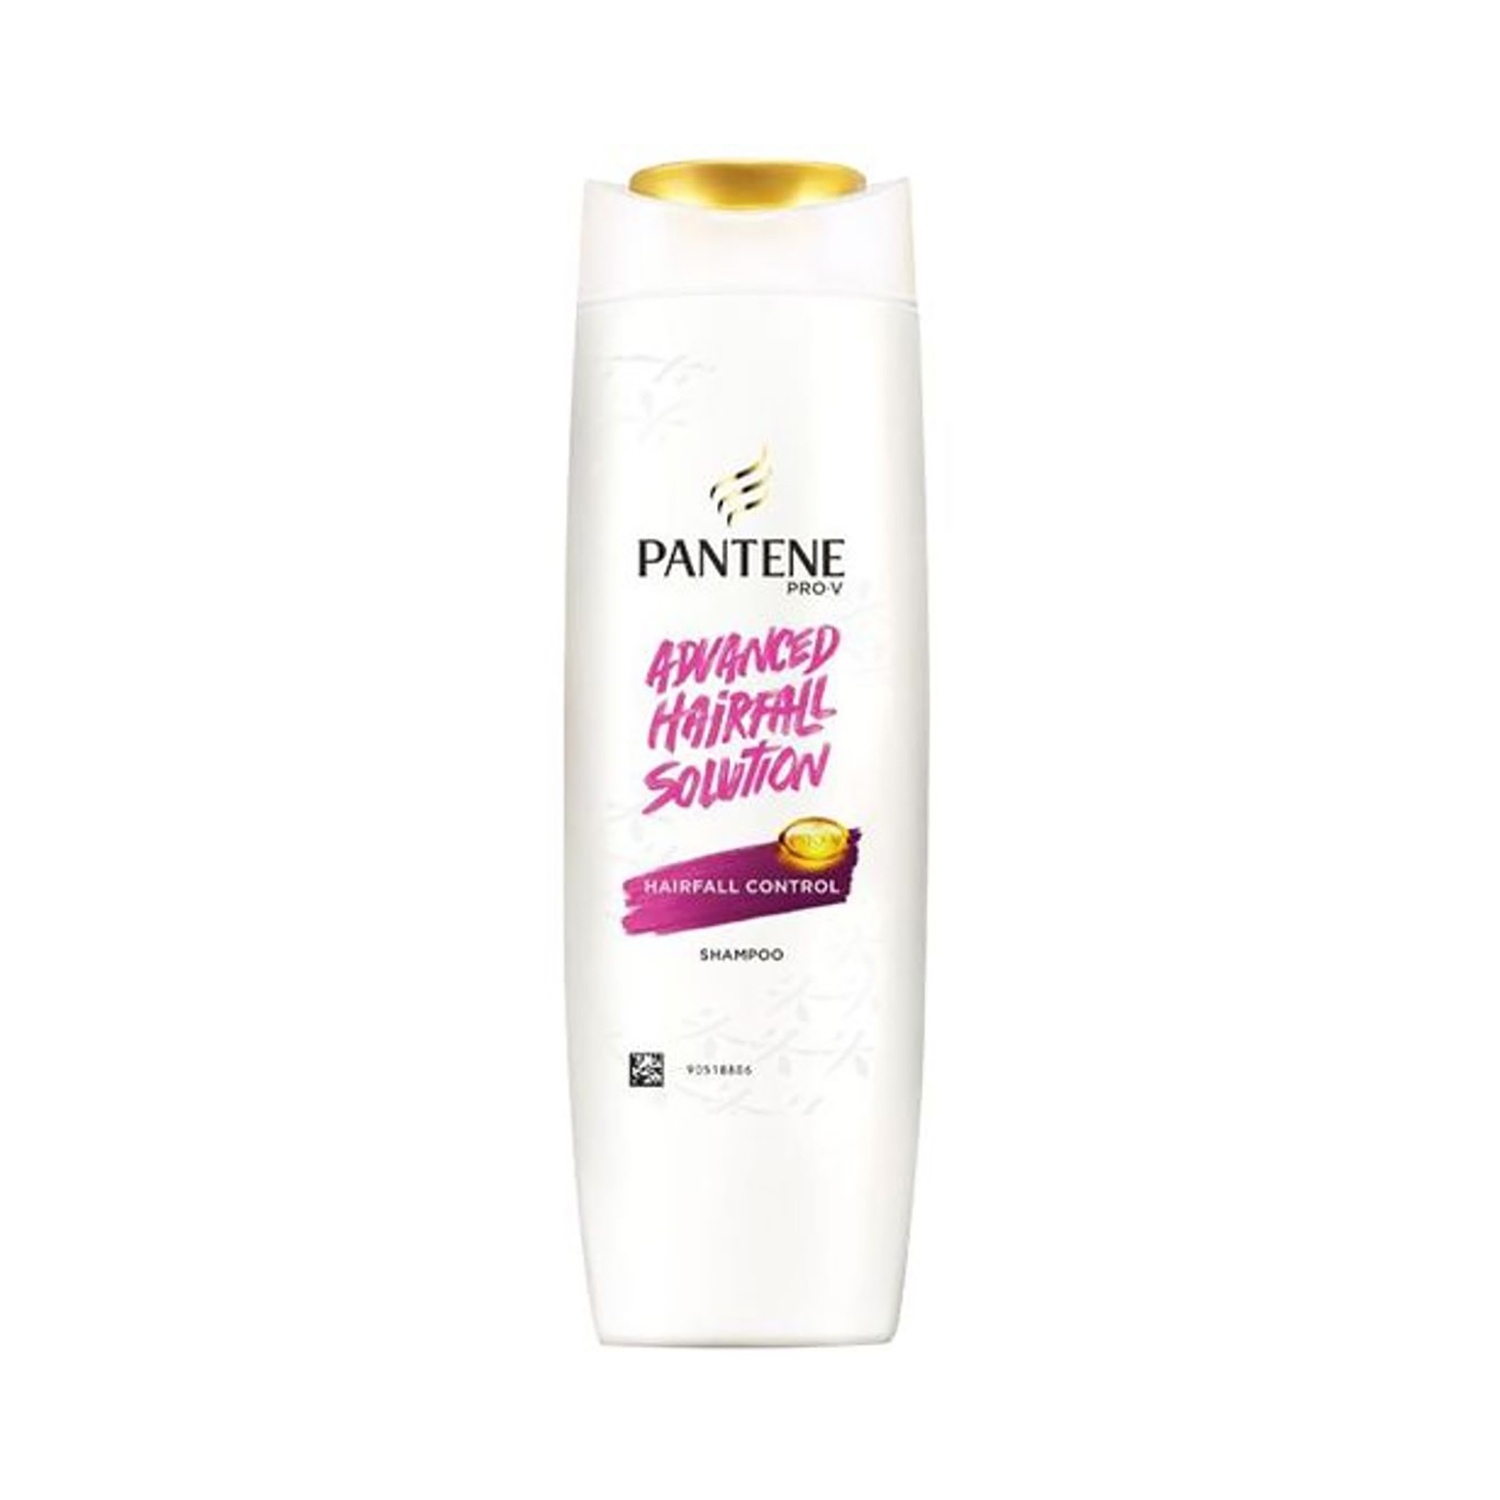 Pantene | Pantene Advanced Hairfall Solution Anti-Hairfall Shampoo (180ml)